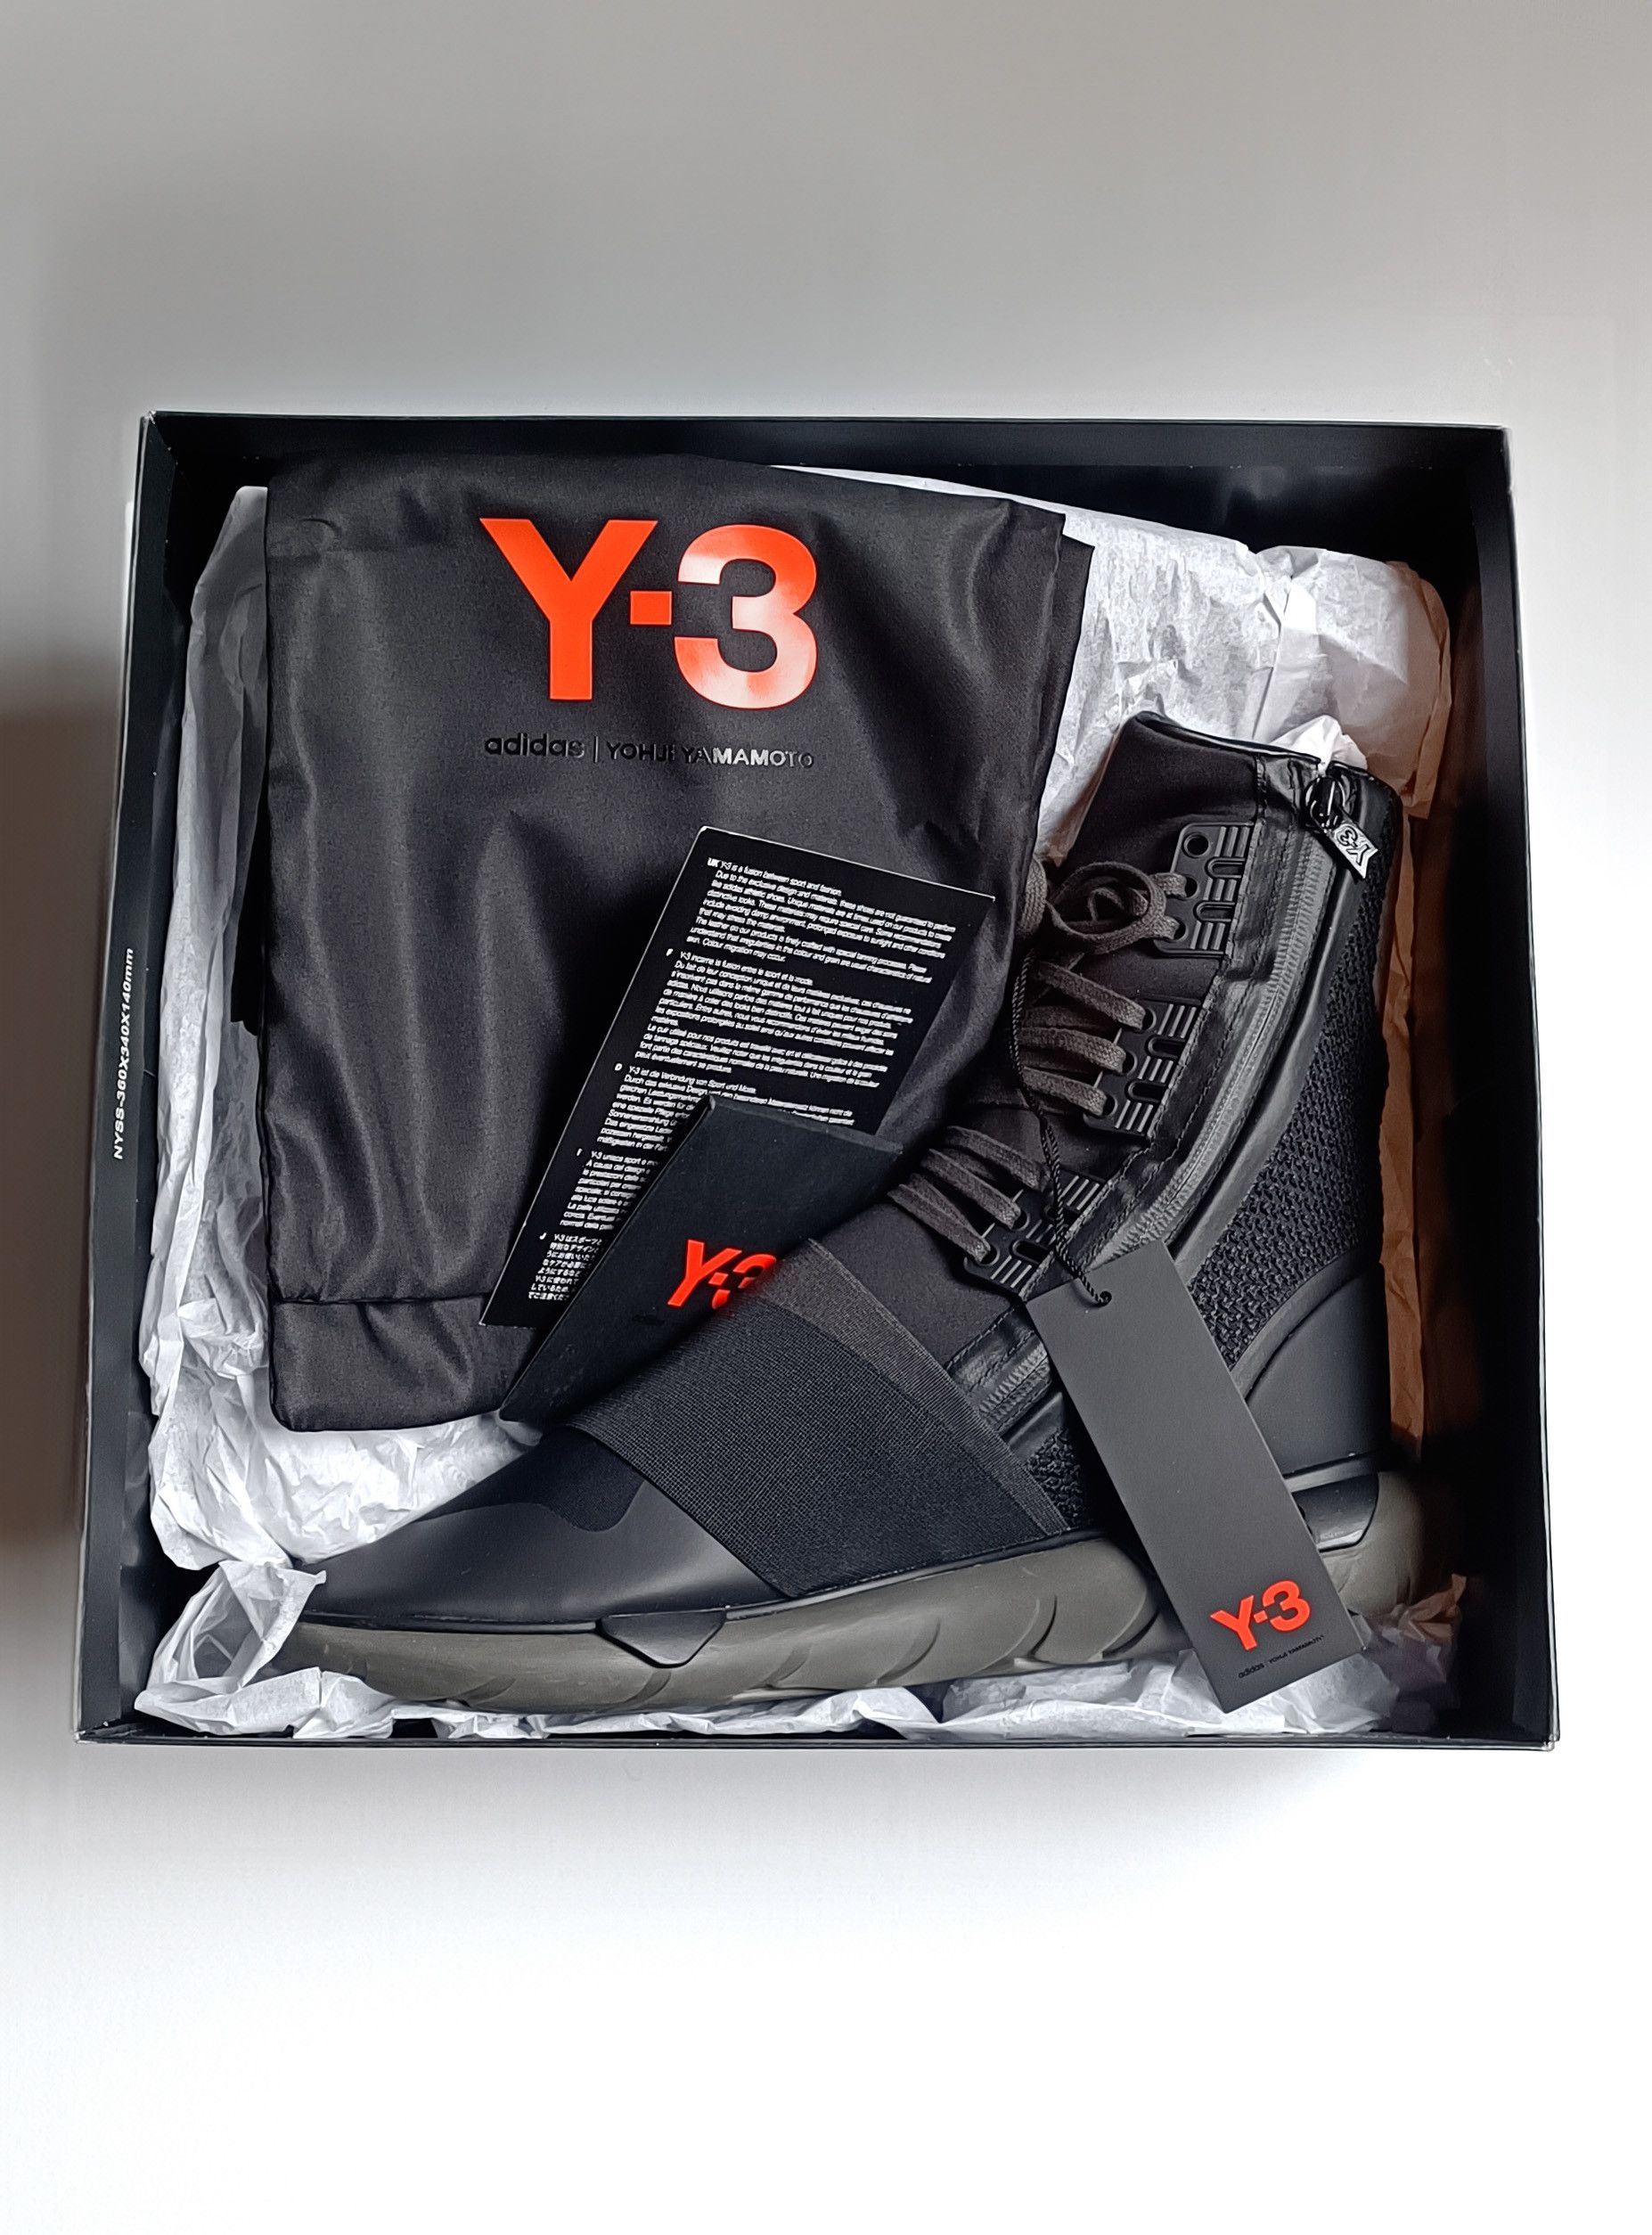 adidas Y-3 Yohji Yamamoto Qasa High Boot (Deadstock) - 15